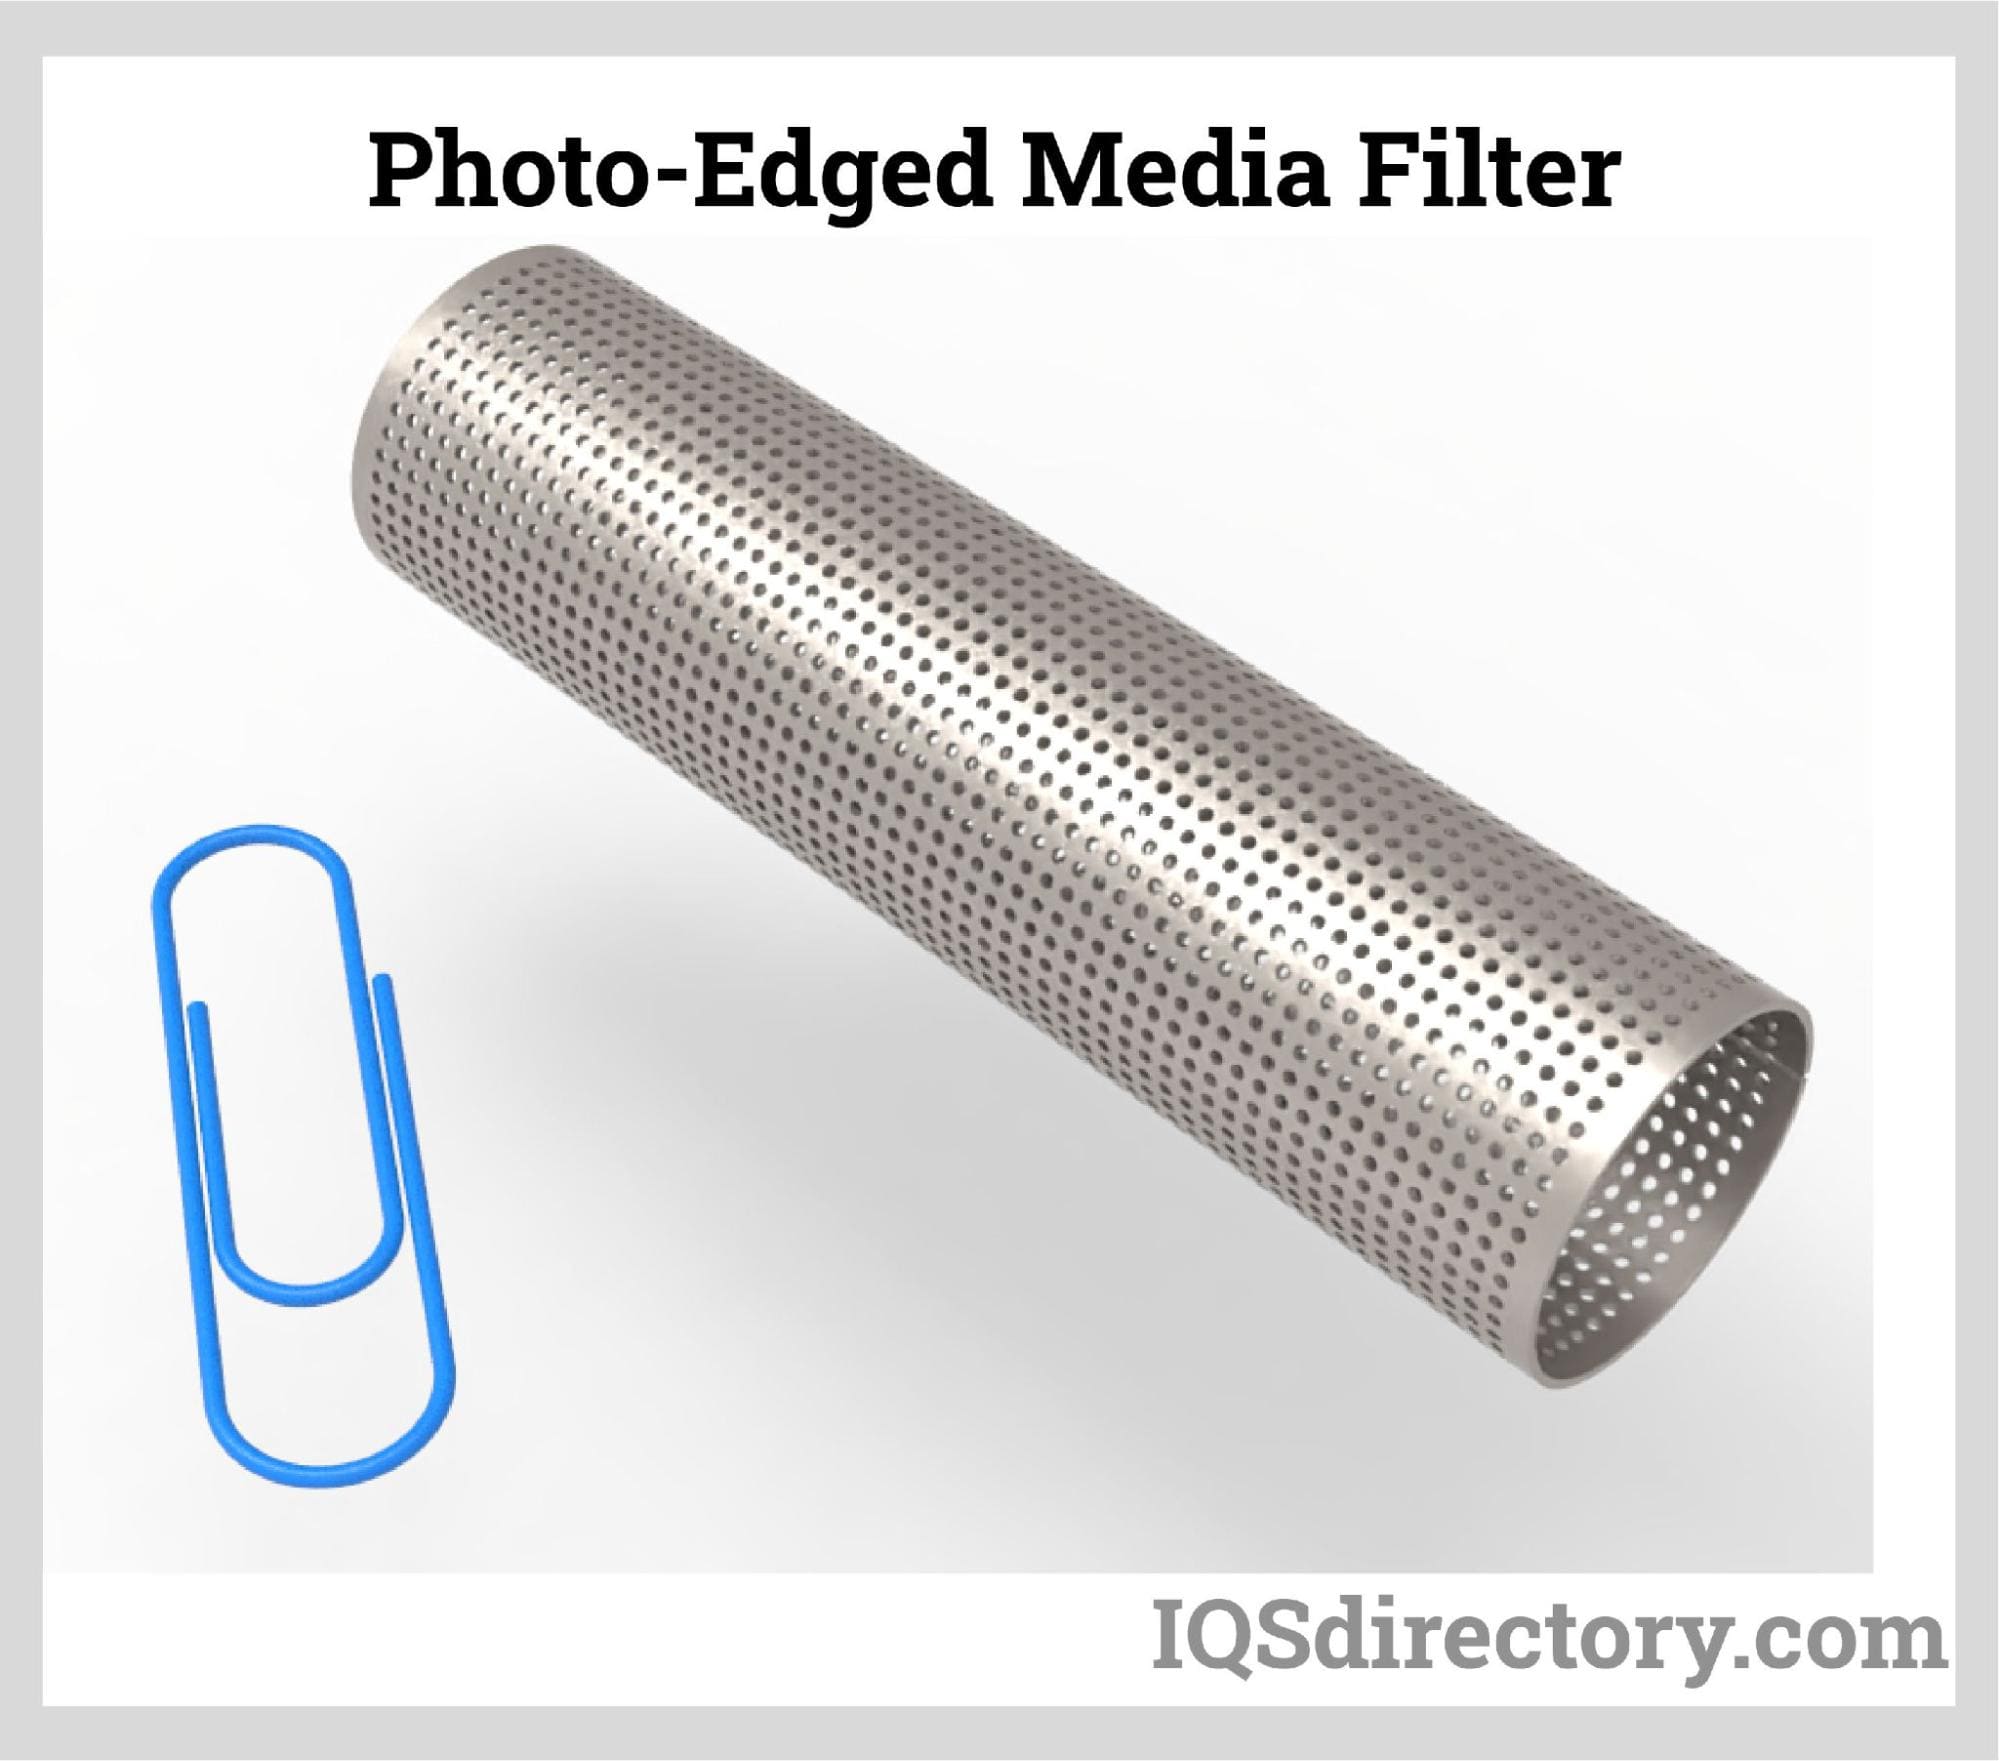 Photo-Edged Media Filter